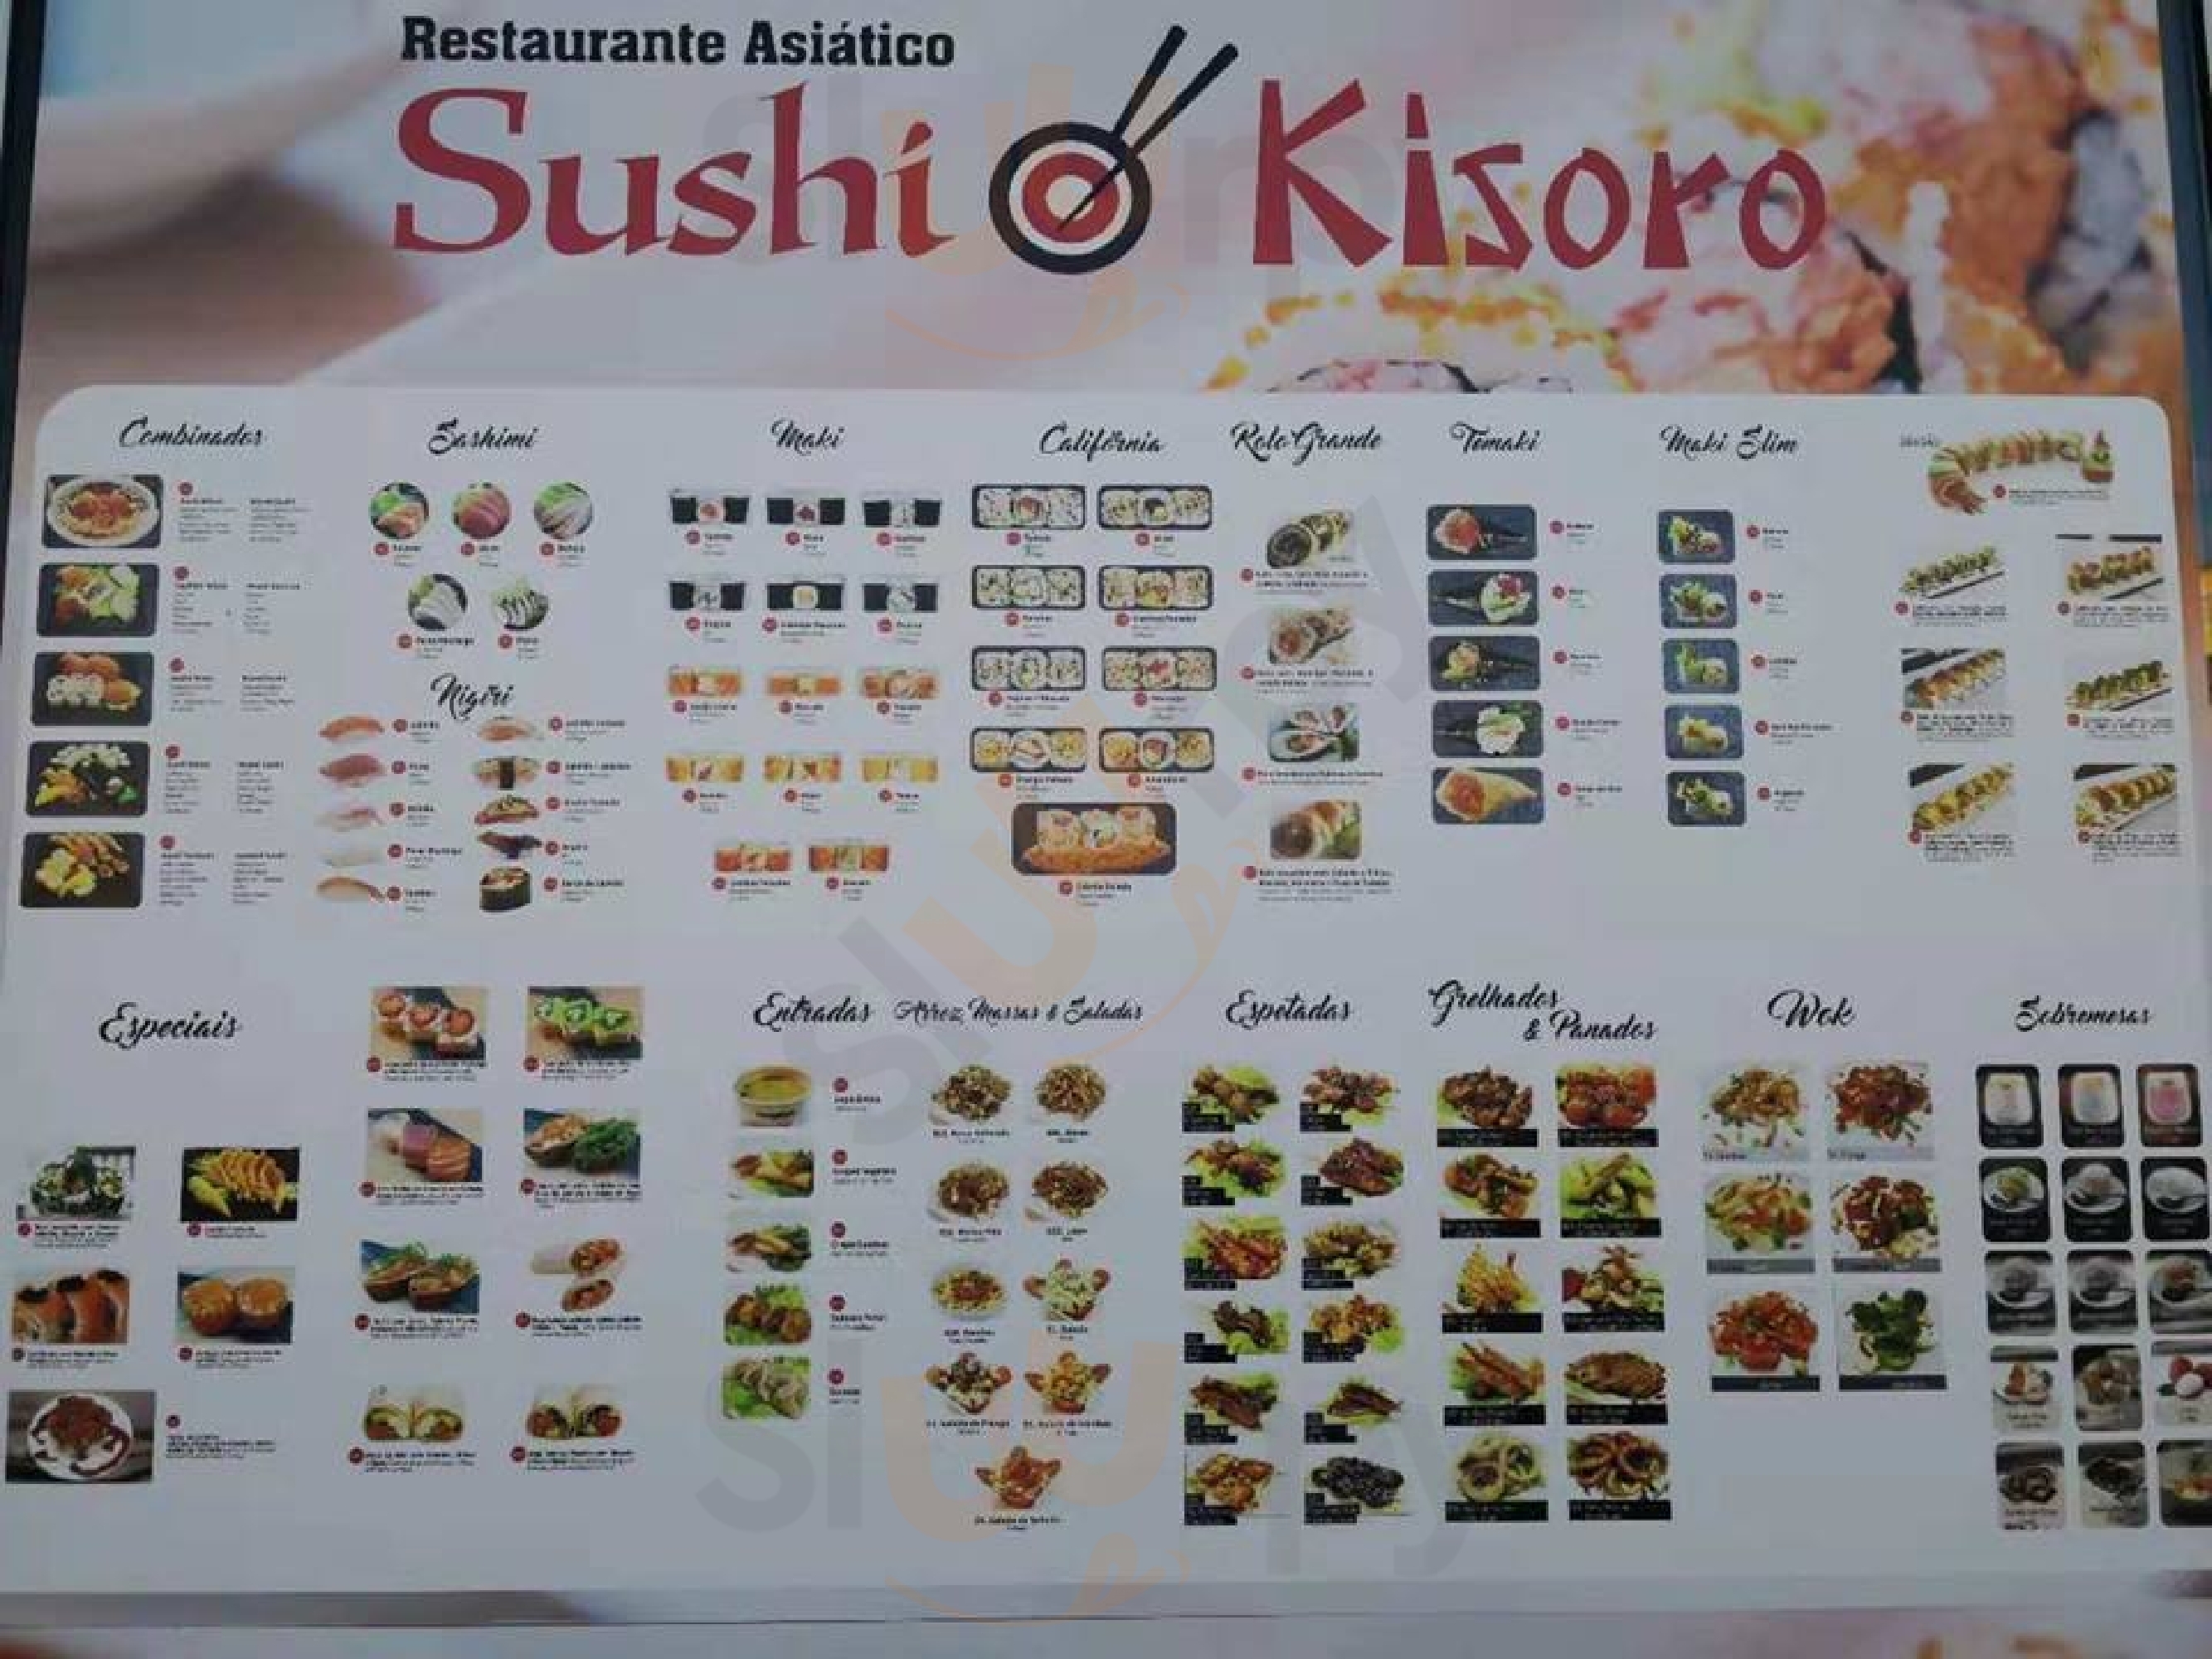 Sushi Kisoro Mafra Menu - 1